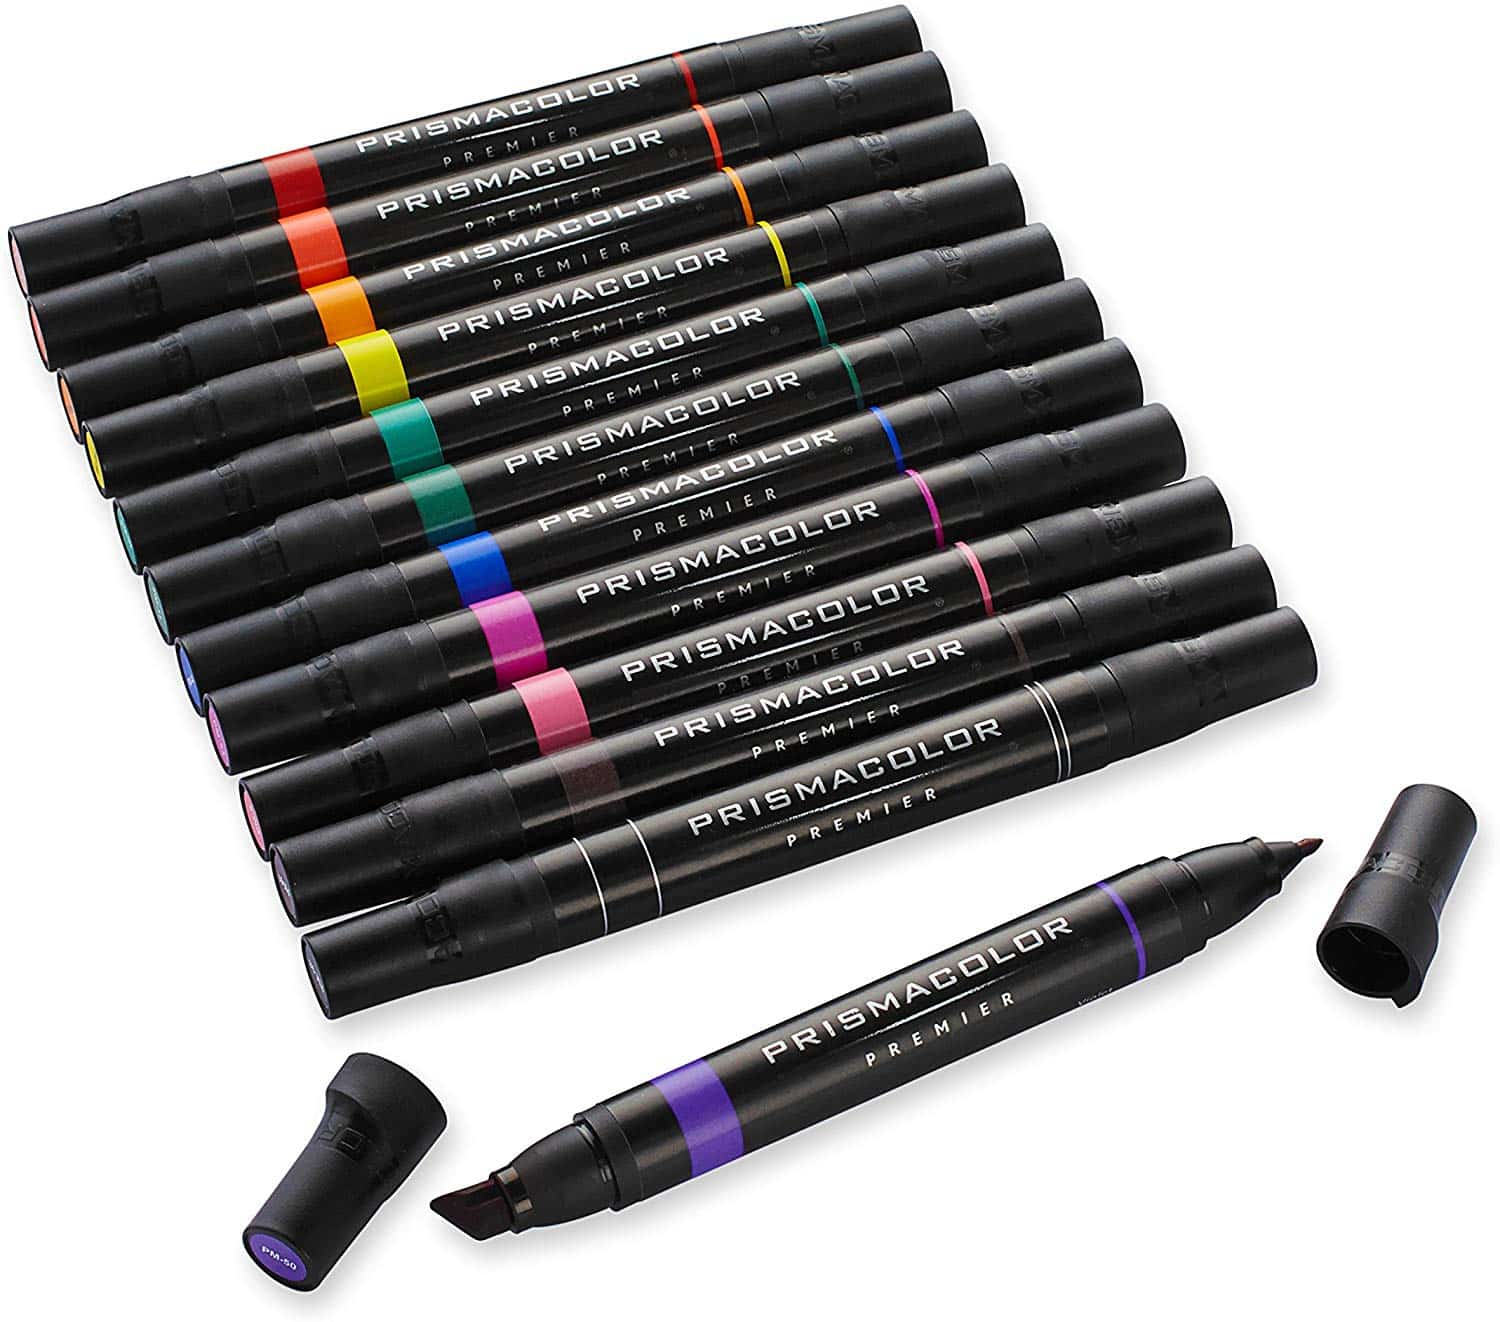 Prismacolor 3620 Premier Double-Ended Art Markers, Fine and Chisel Tip, 12 Pack $18.18 (REG $50.15)